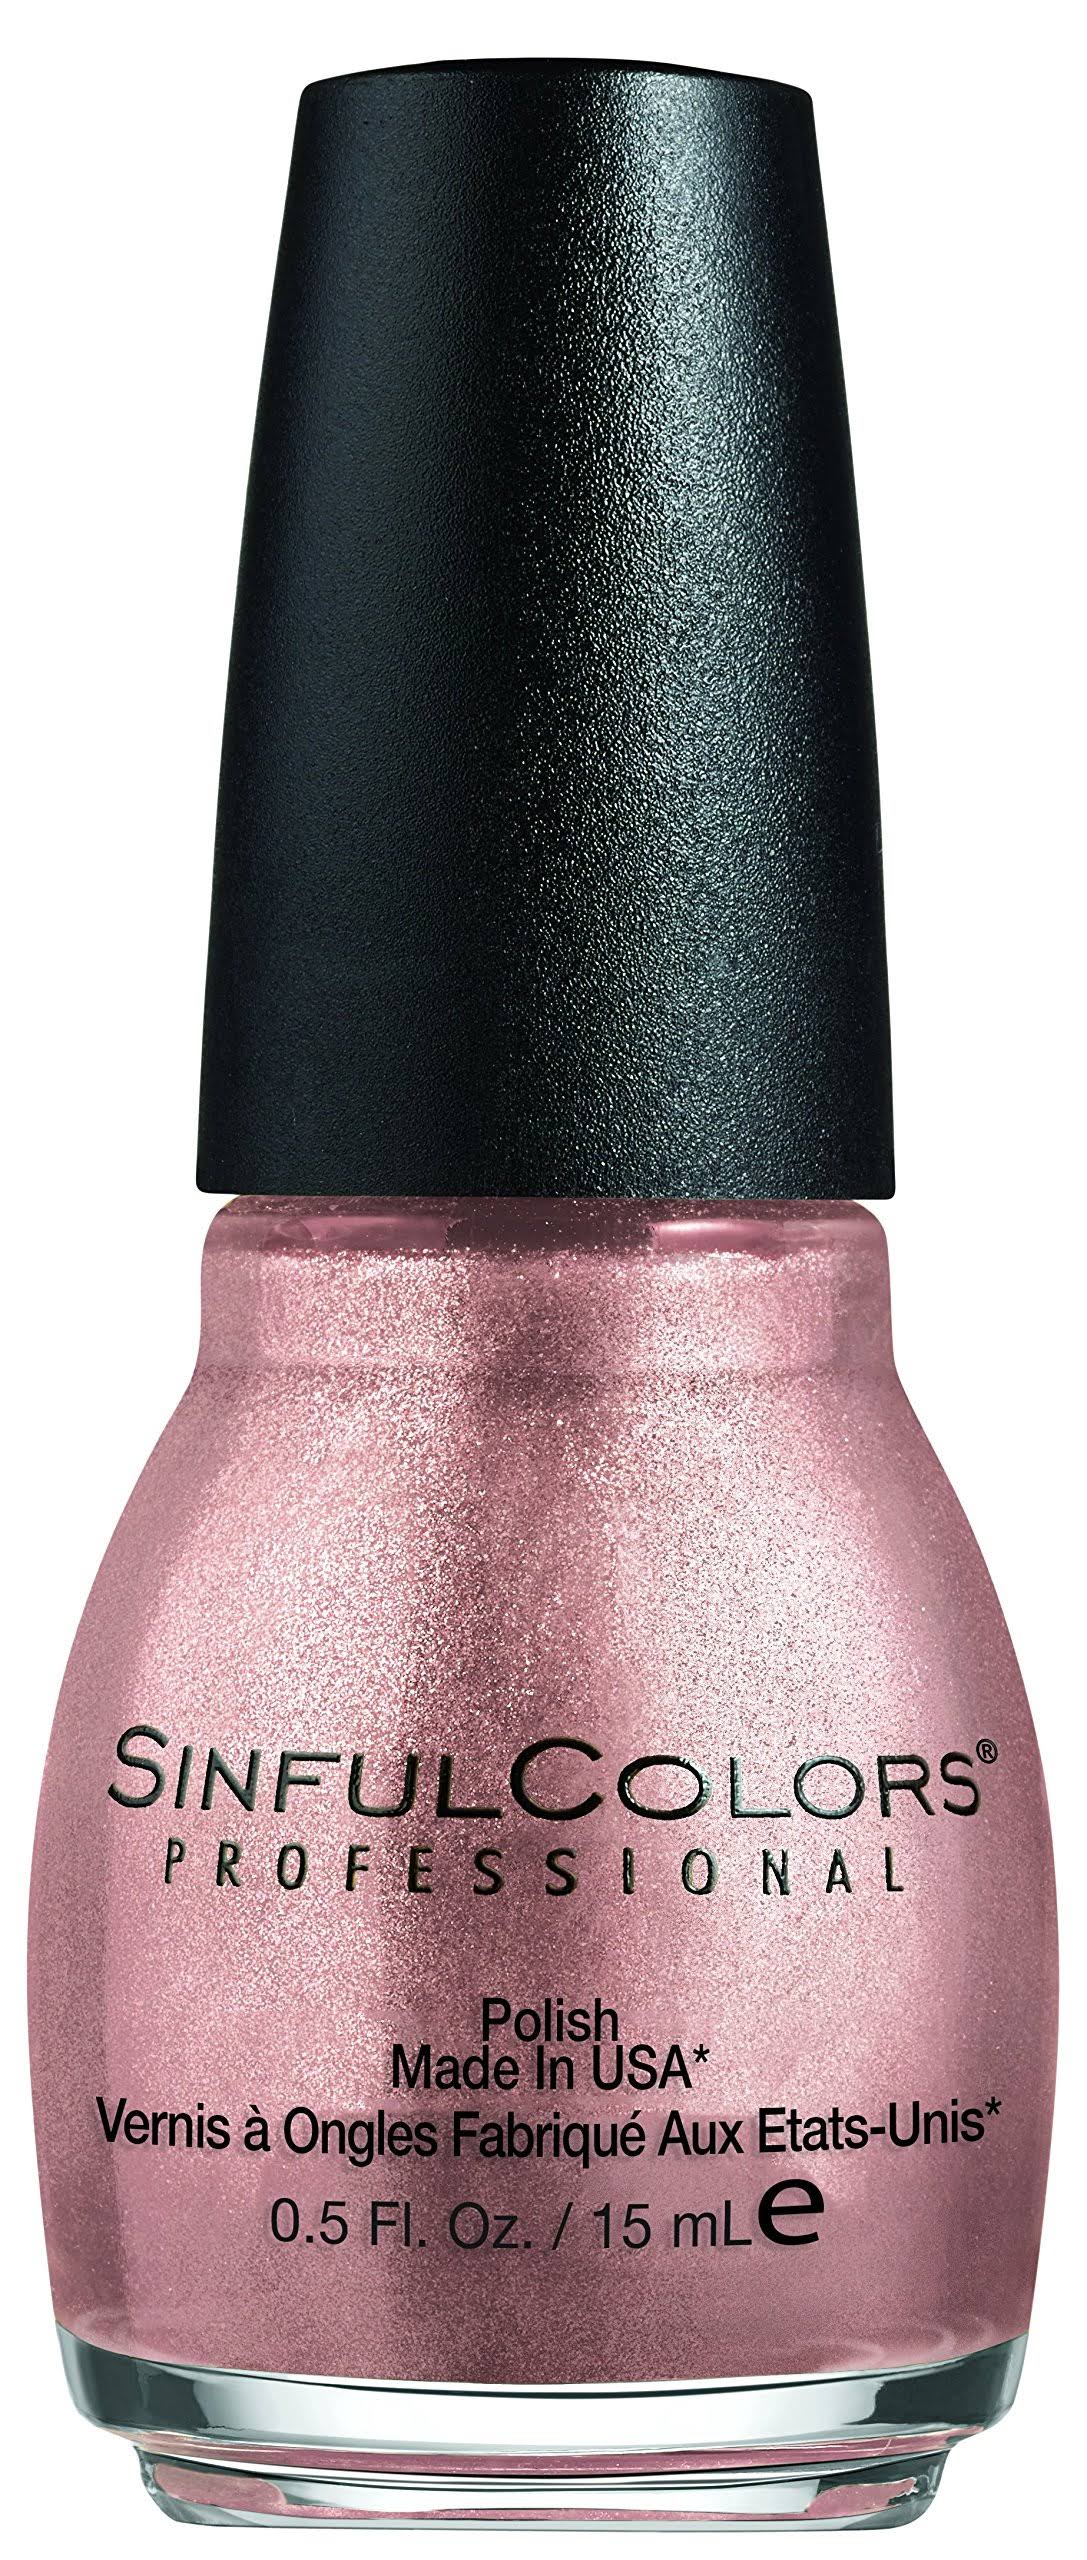 Sinful Colors Professional Nail Polish - 1148 Supernova, 0.5 fl oz